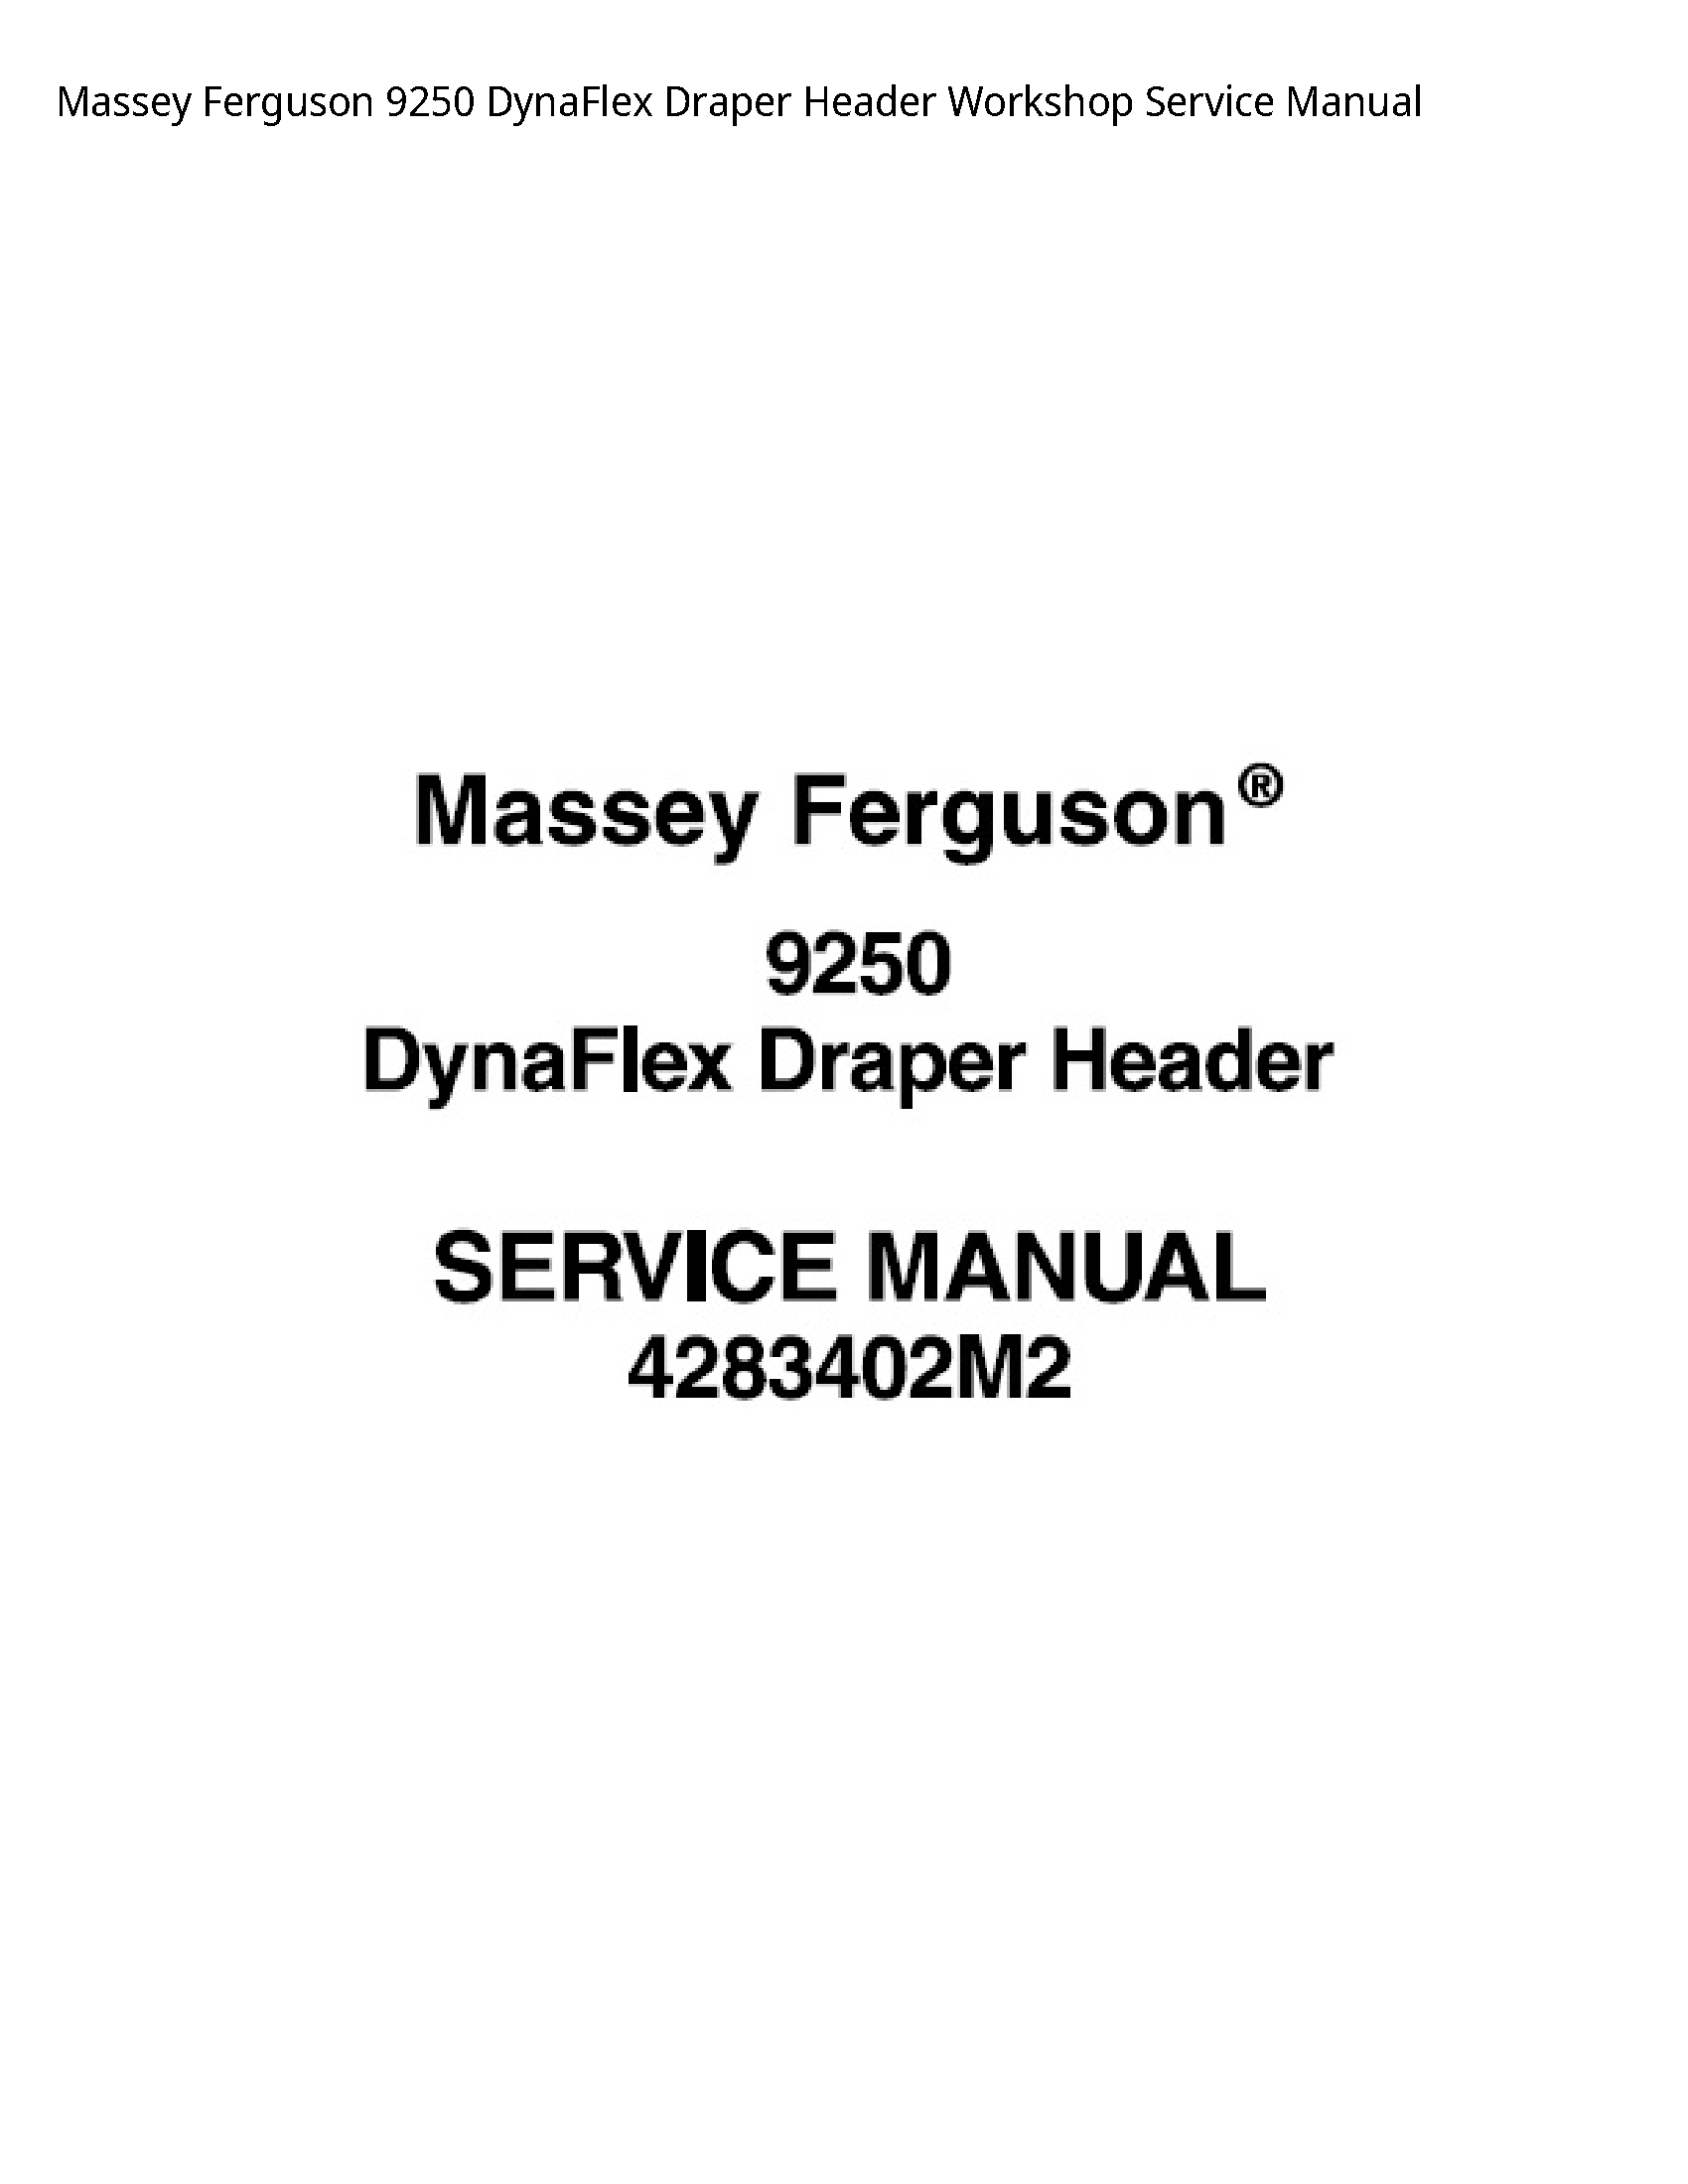 Massey Ferguson 9250 DynaFlex Draper Header Service manual